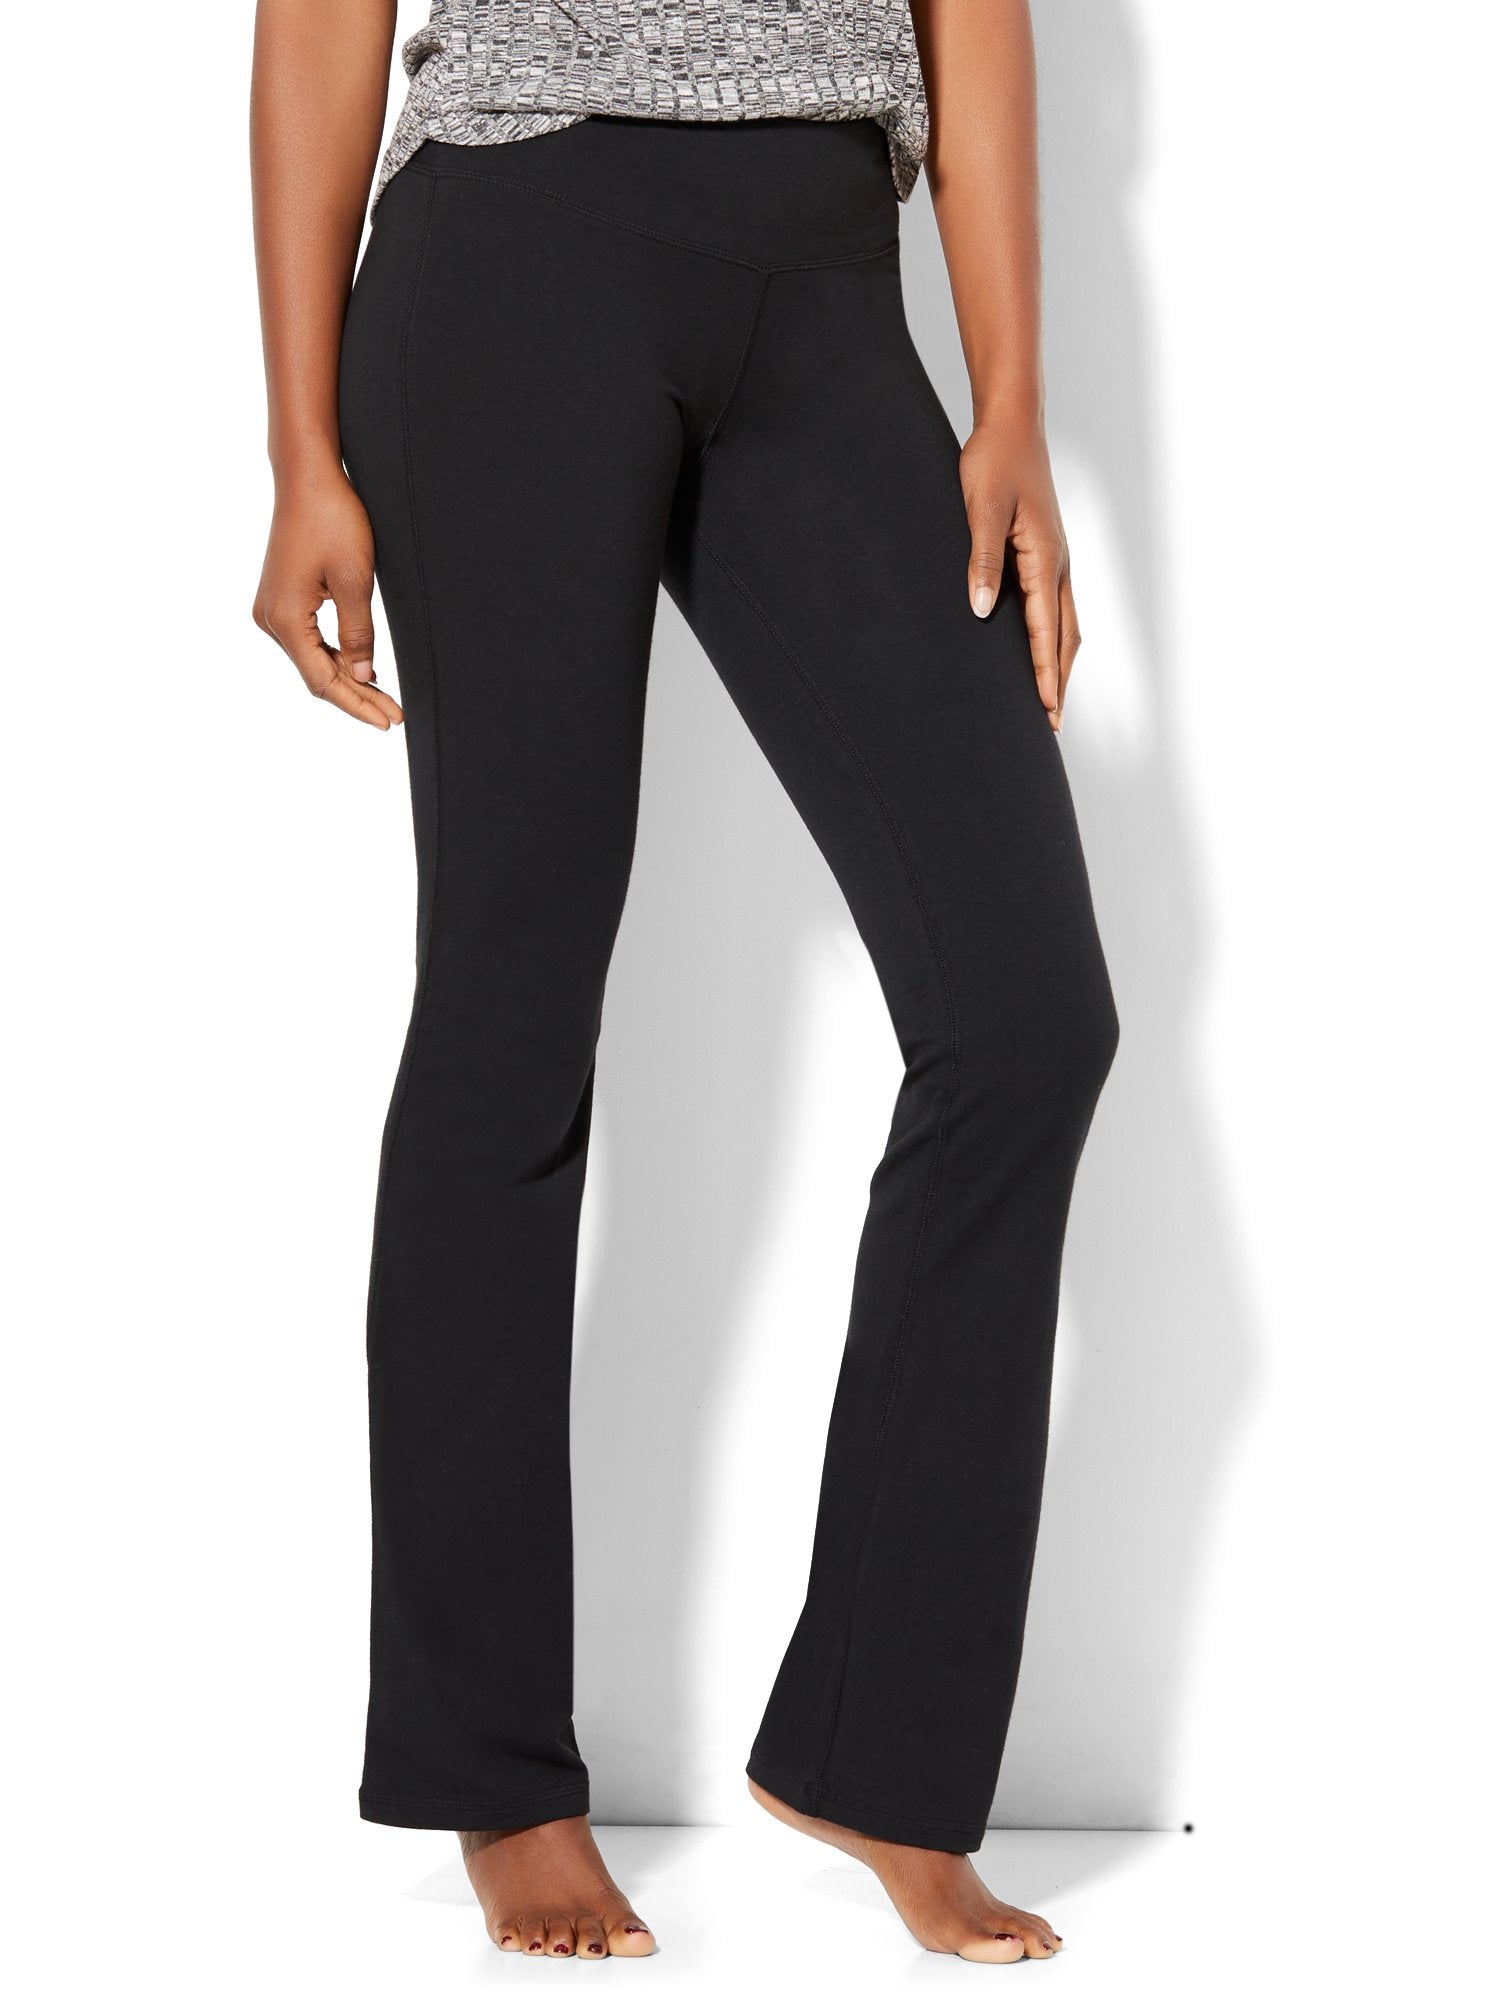 Yogipace,Petite Women's Bootcut Yoga Pants Long Workout Pant,27,Charcoal,Size  XXL price in UAE,  UAE